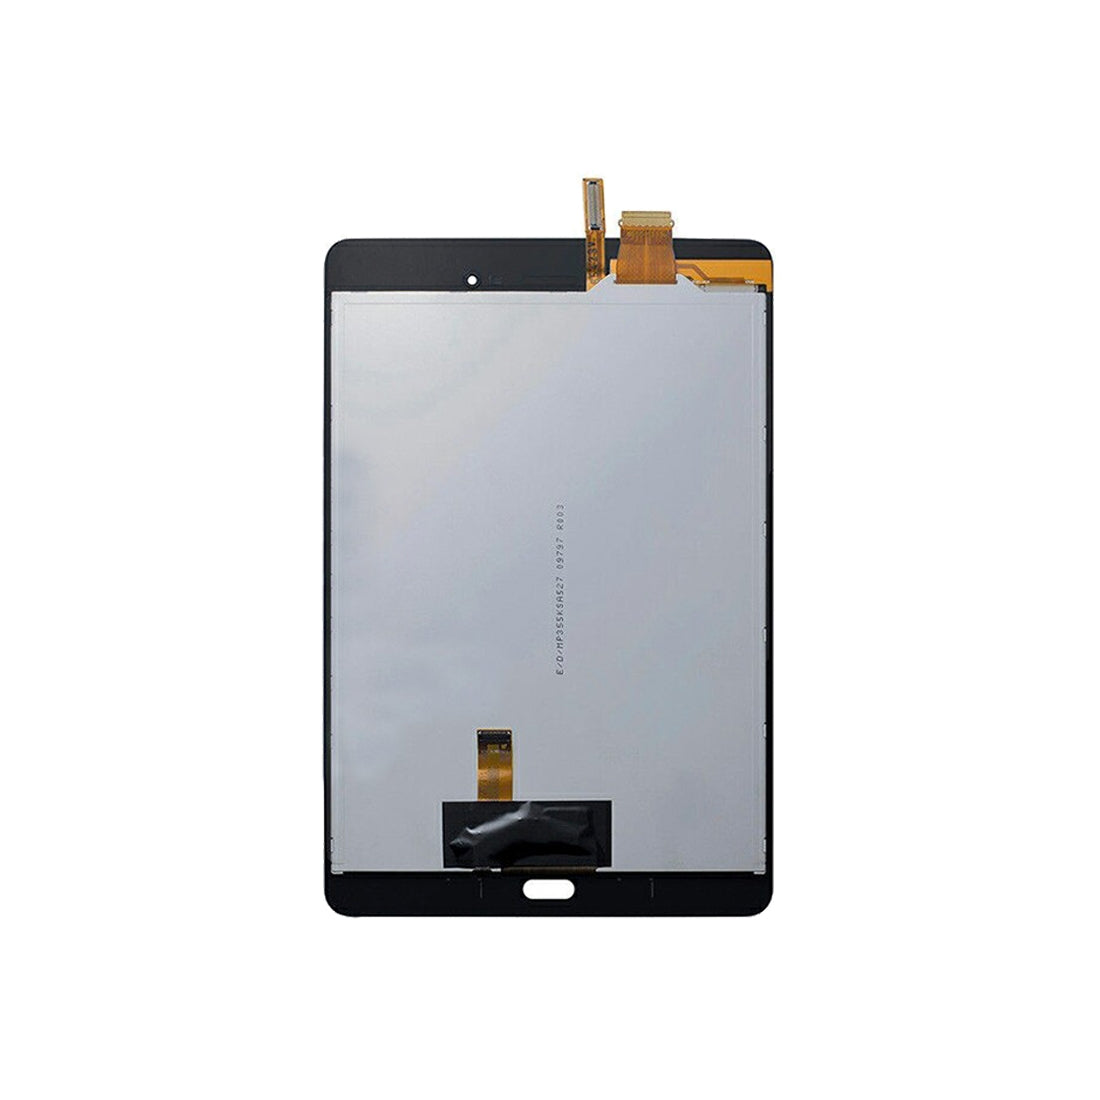 LCD + Touch Screen Samsung Galaxy Tab A 8.0 (Wifi Version) P350 White